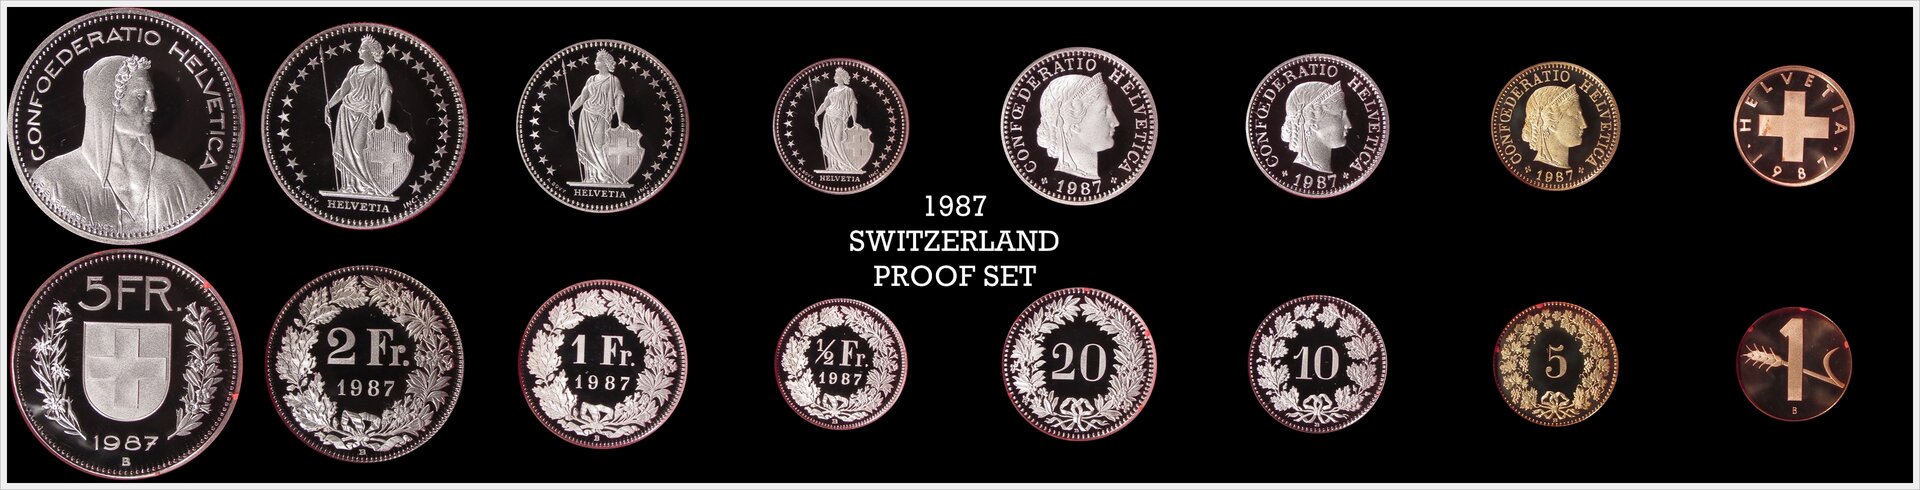 Switzerland 1987 Proof Set.jpg